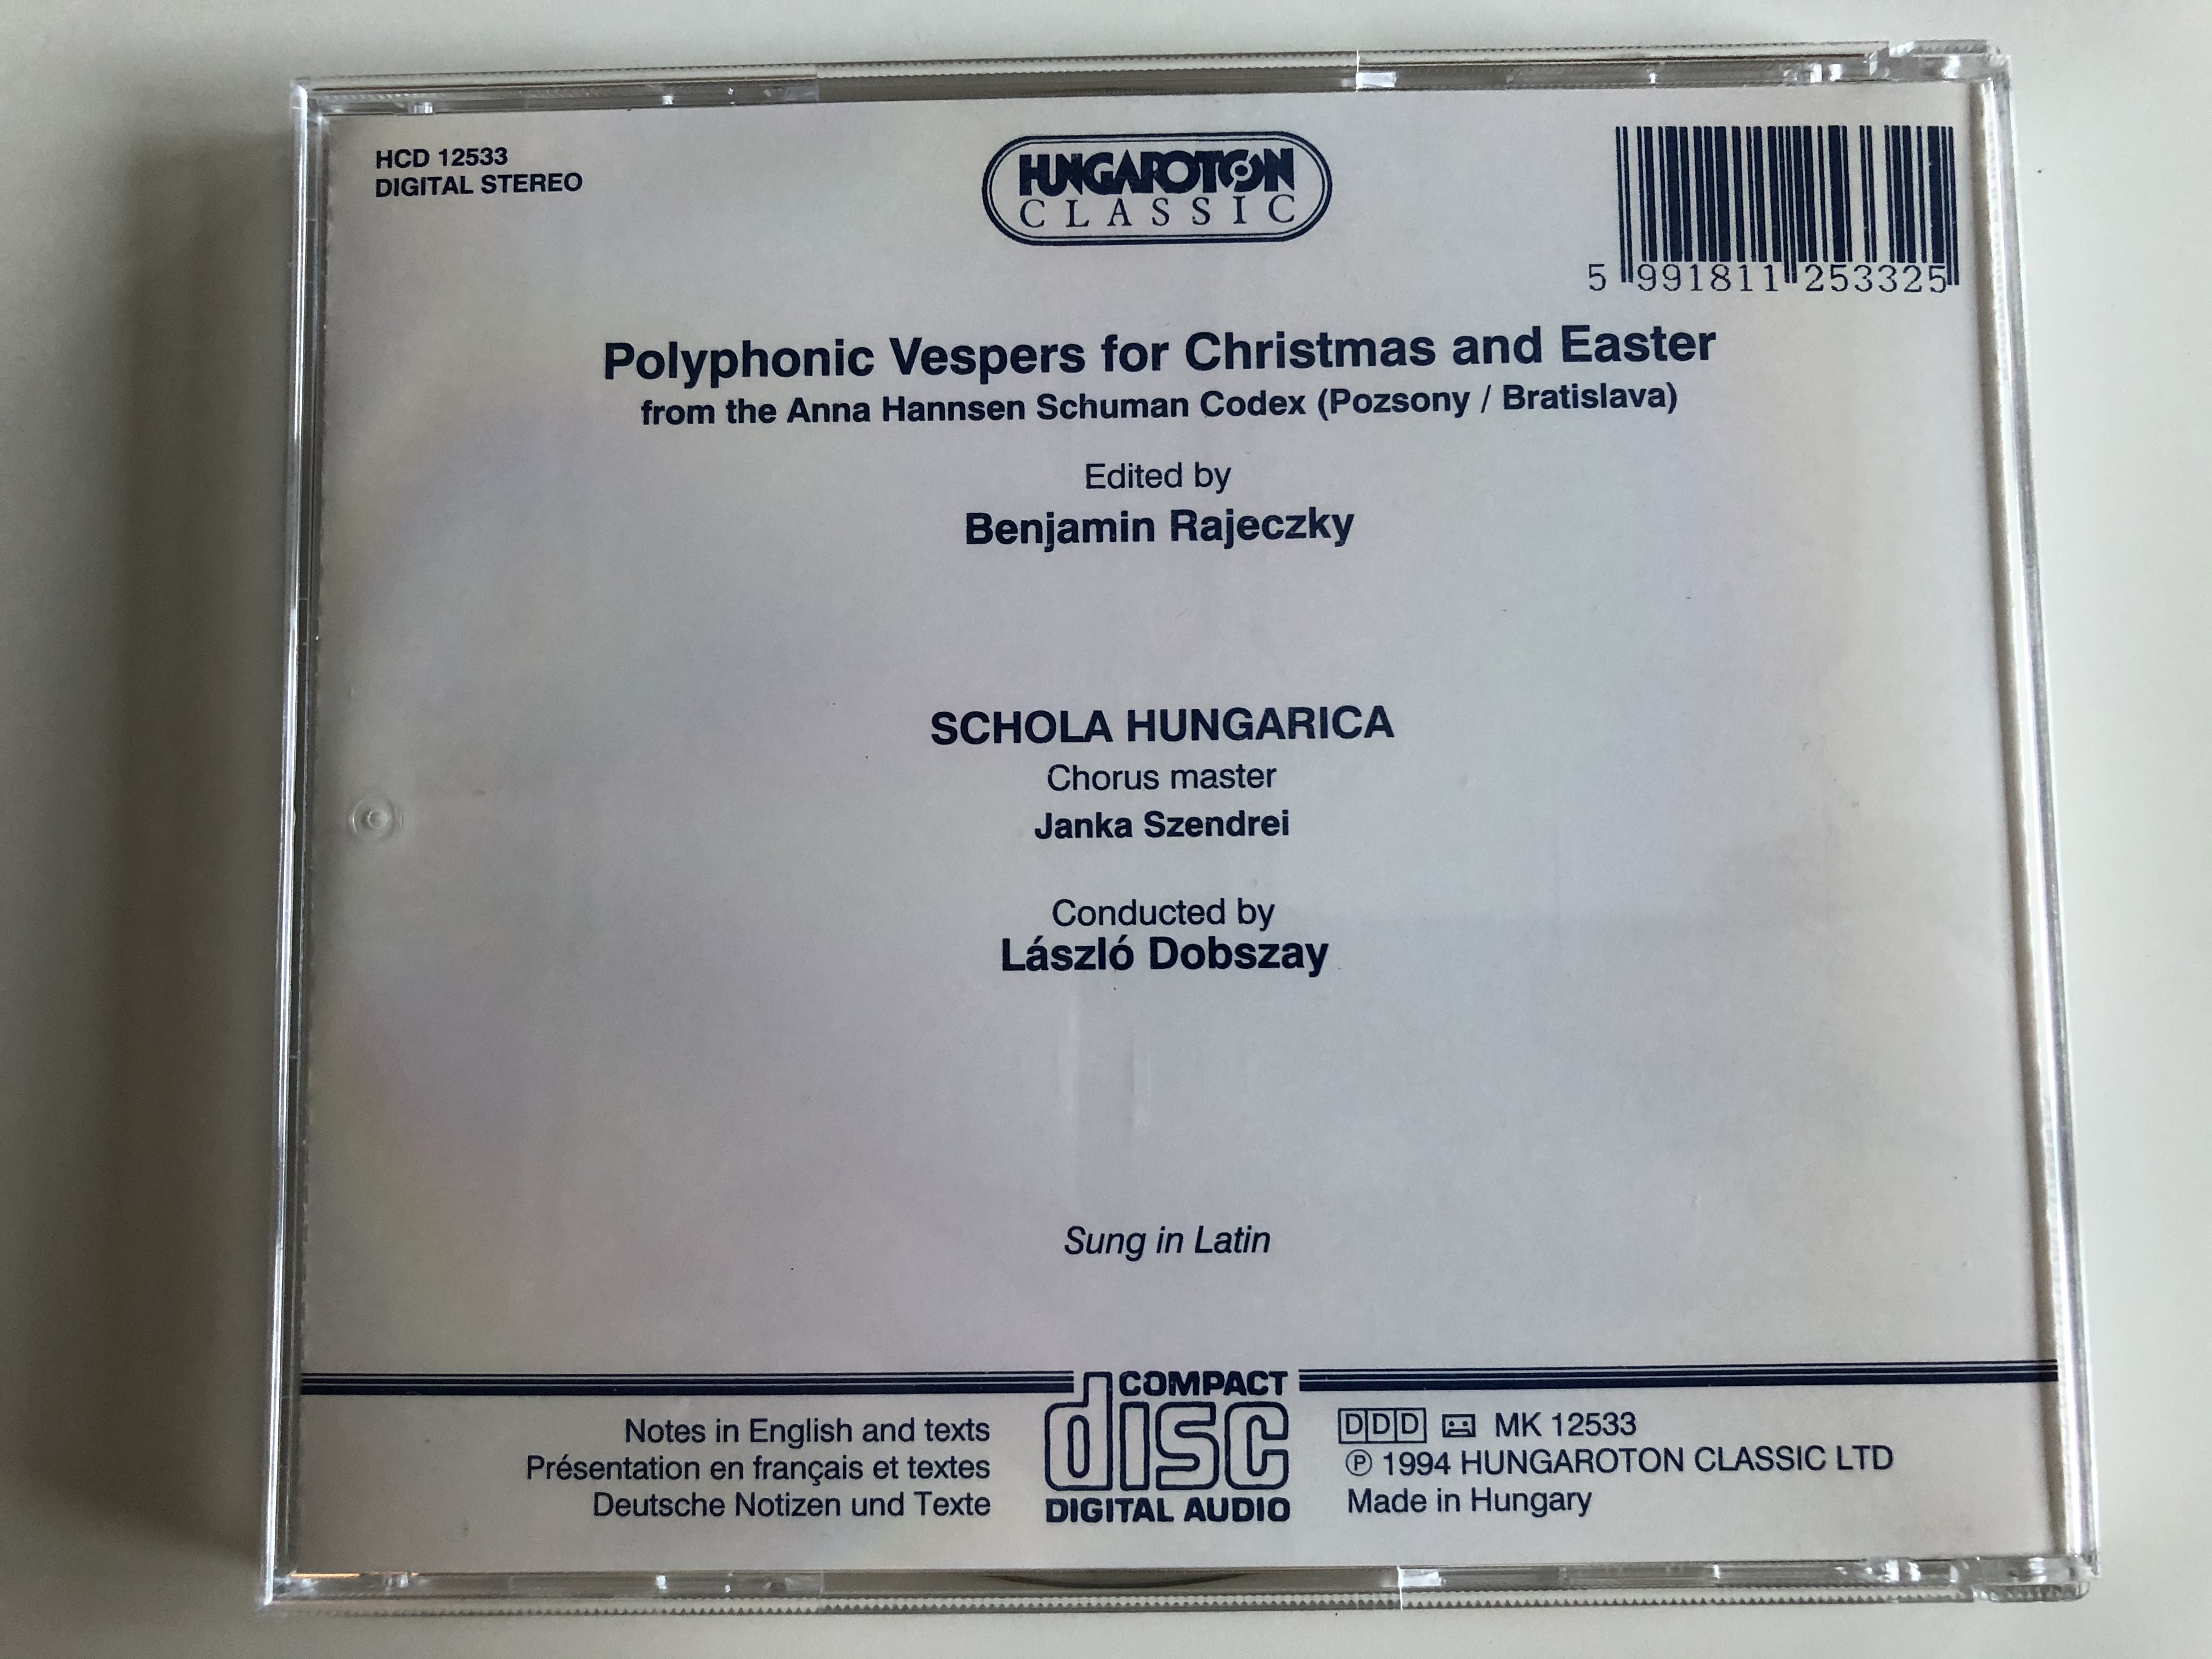 vespers-for-christmas-and-easter-schola-hungarica-laszlo-dobszay-hungaroton-classic-audio-cd-1994-stereo-hcd-12533-12-.jpg